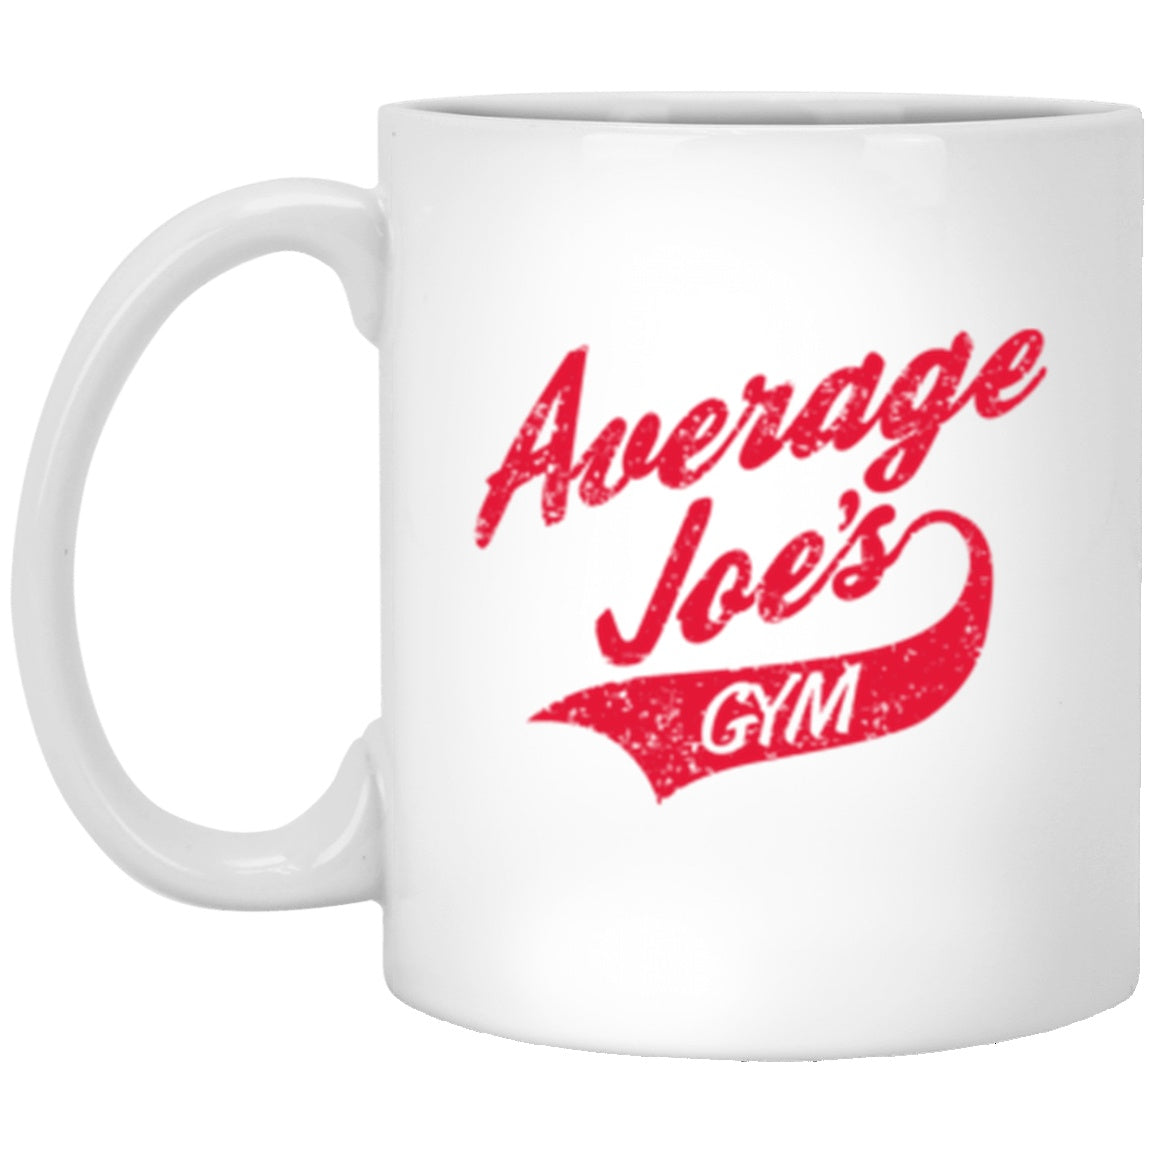 https://cdn.shopify.com/s/files/1/2506/0800/products/drinkware-average-joes-gym-white-mug-11oz-2-sided-1.jpeg?v=1534954228